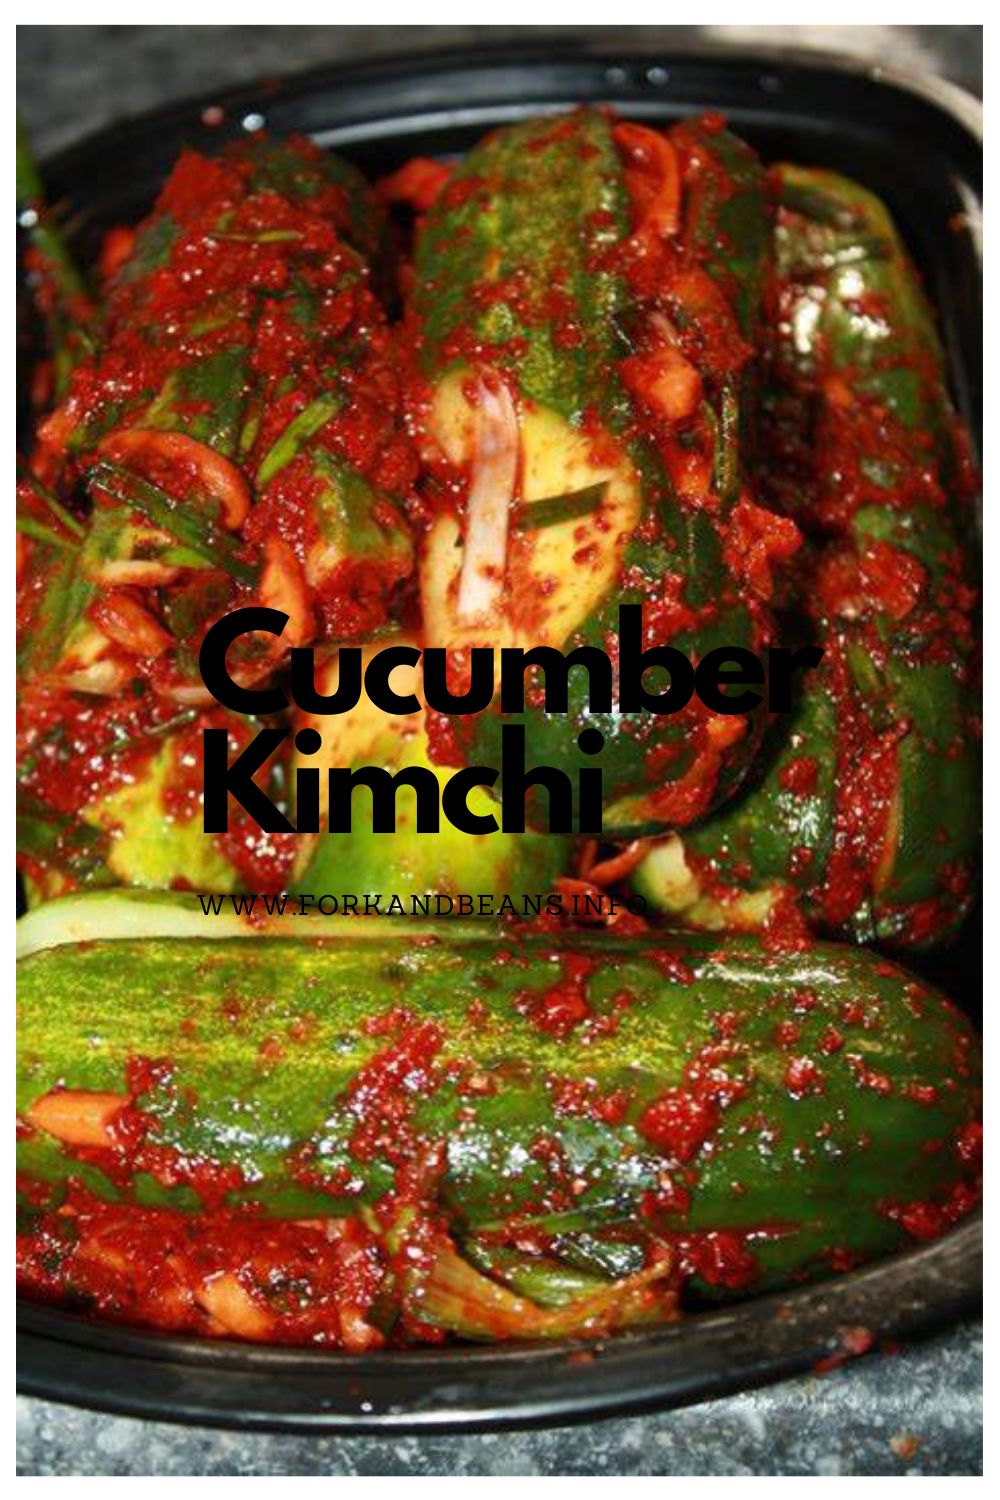 Cucumber Kimchi 2 Ways